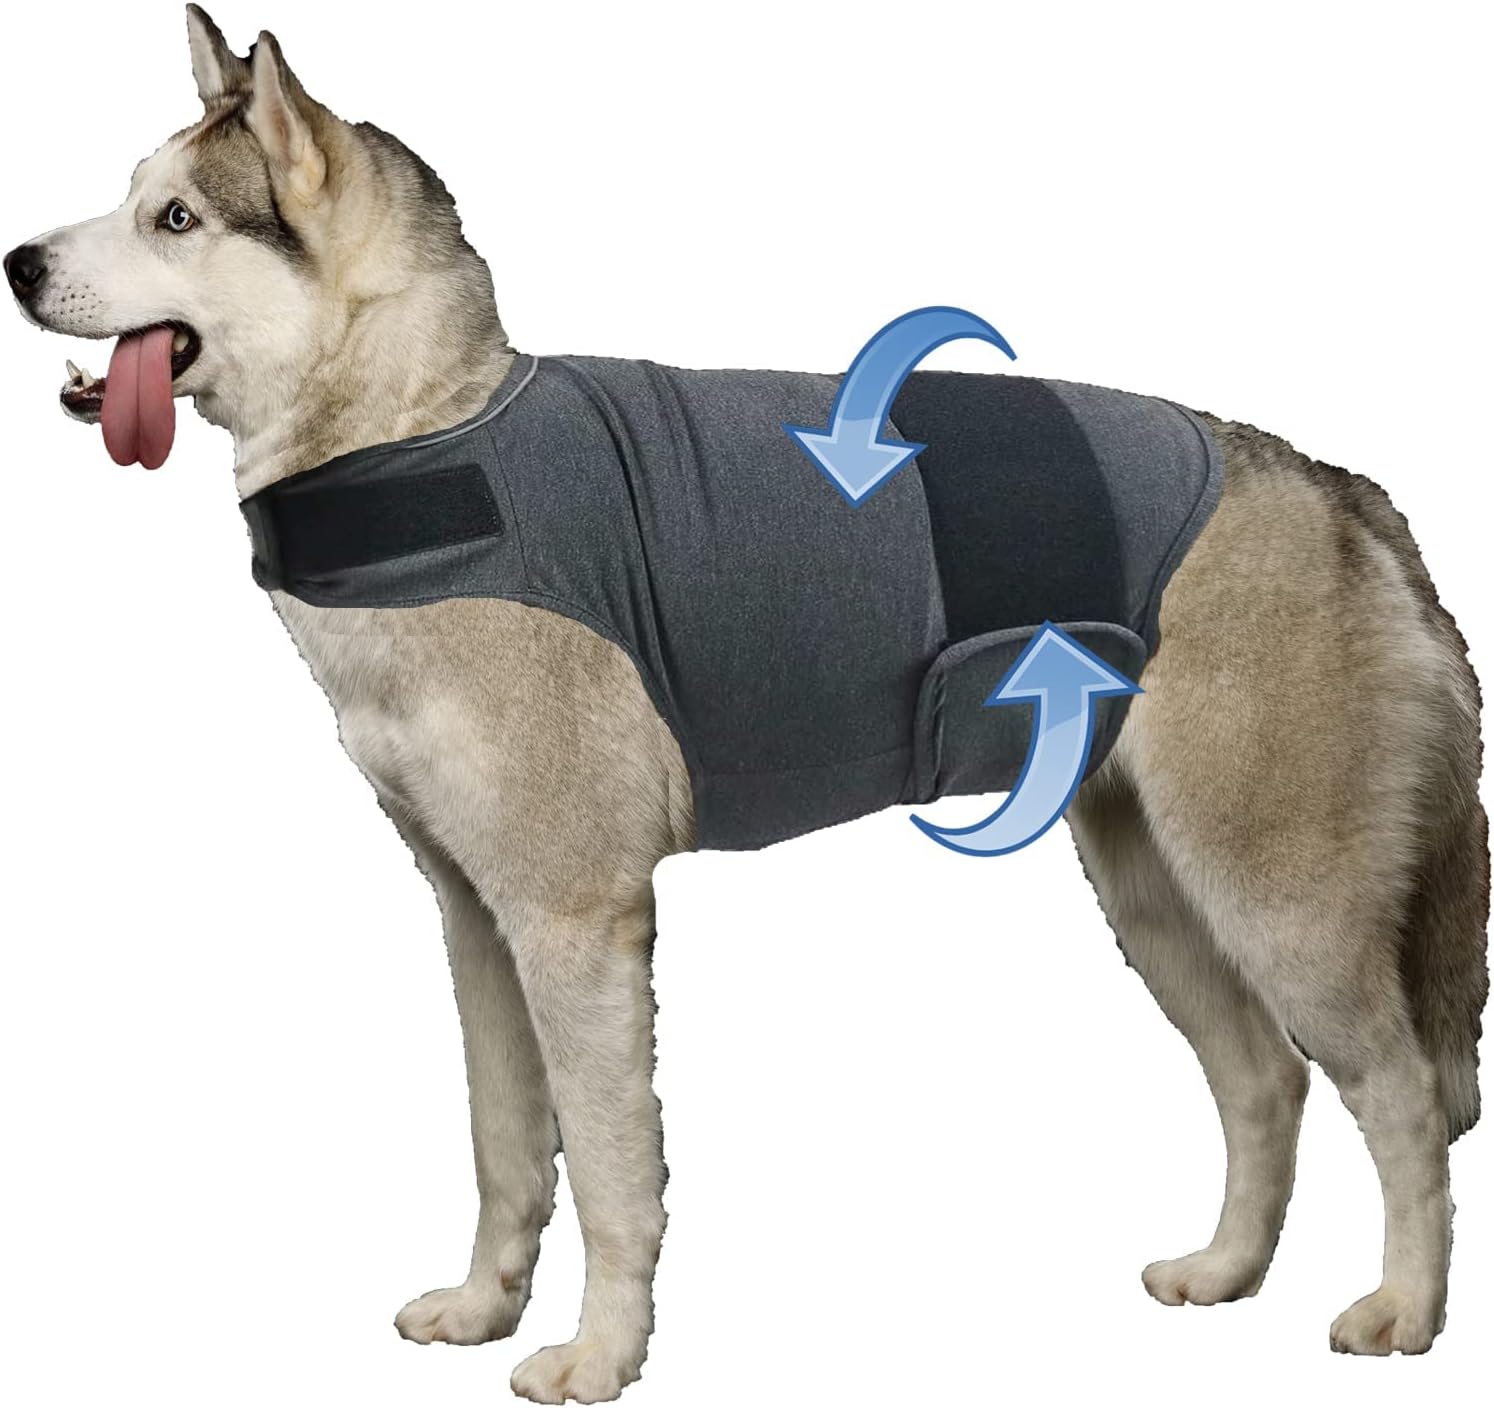 HCHYEY Dog Anxiety Jacket, Skin-Friendly Dog Calming Shirt